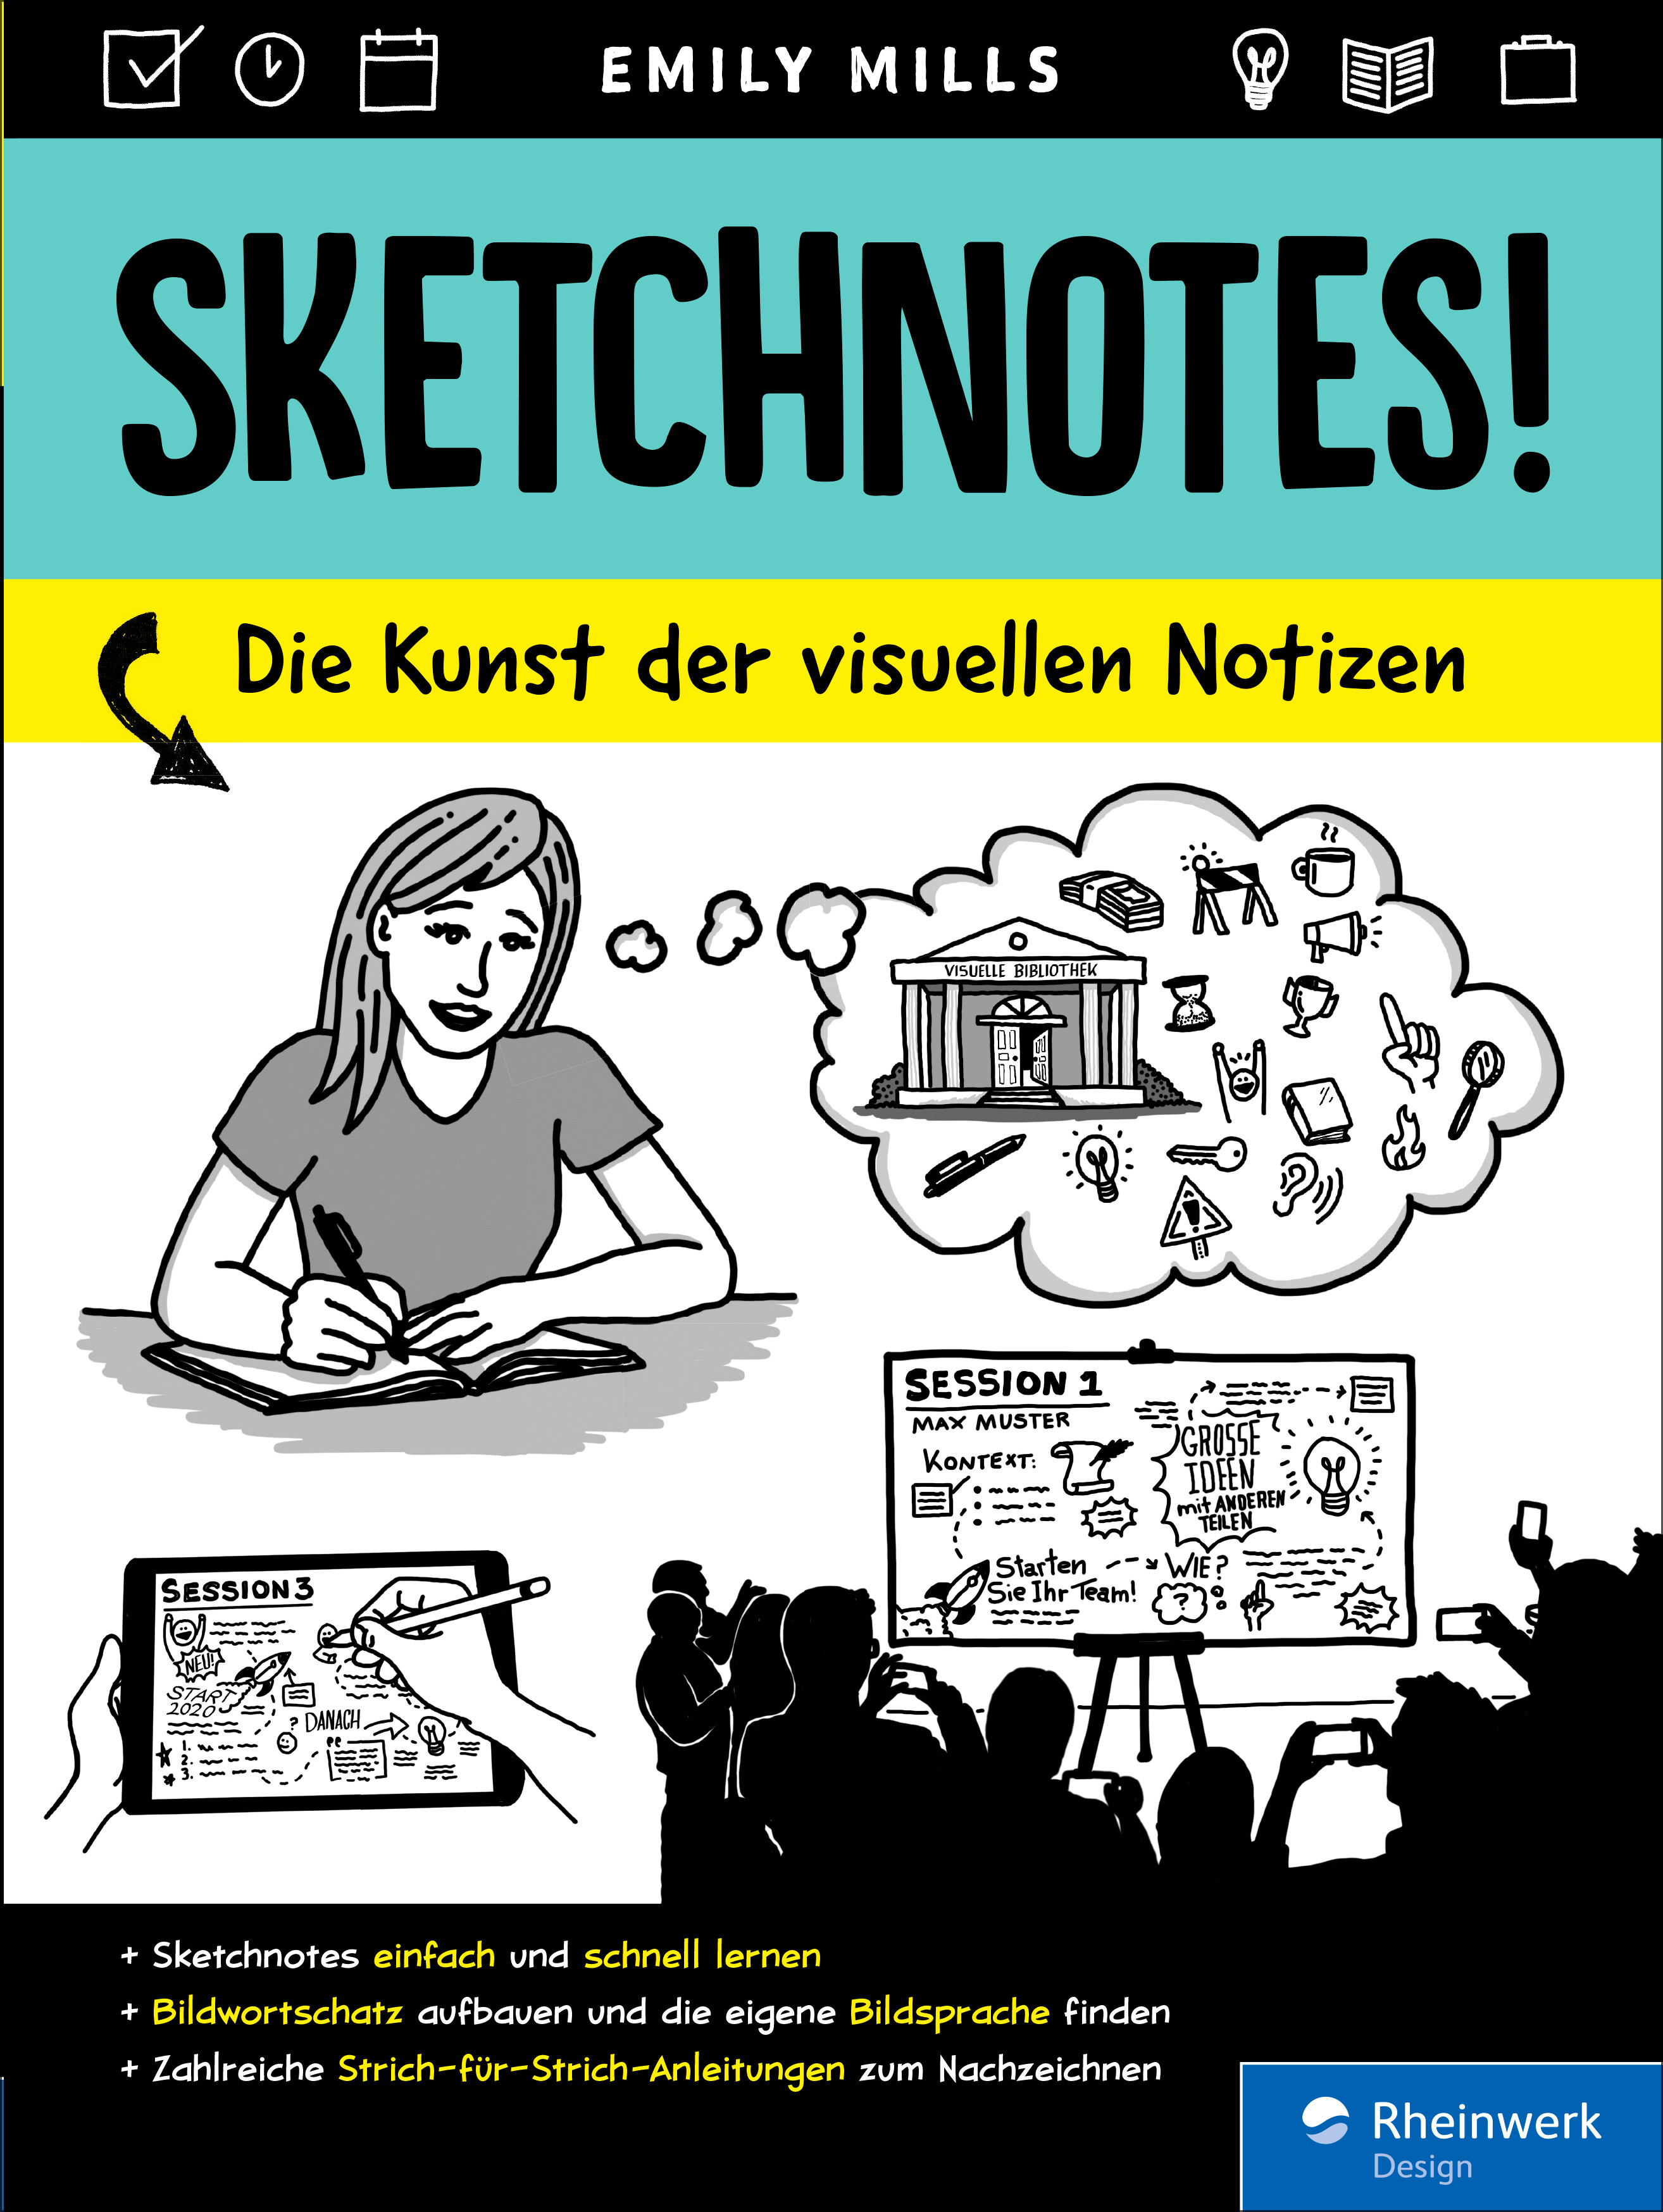 Sketchnotes!